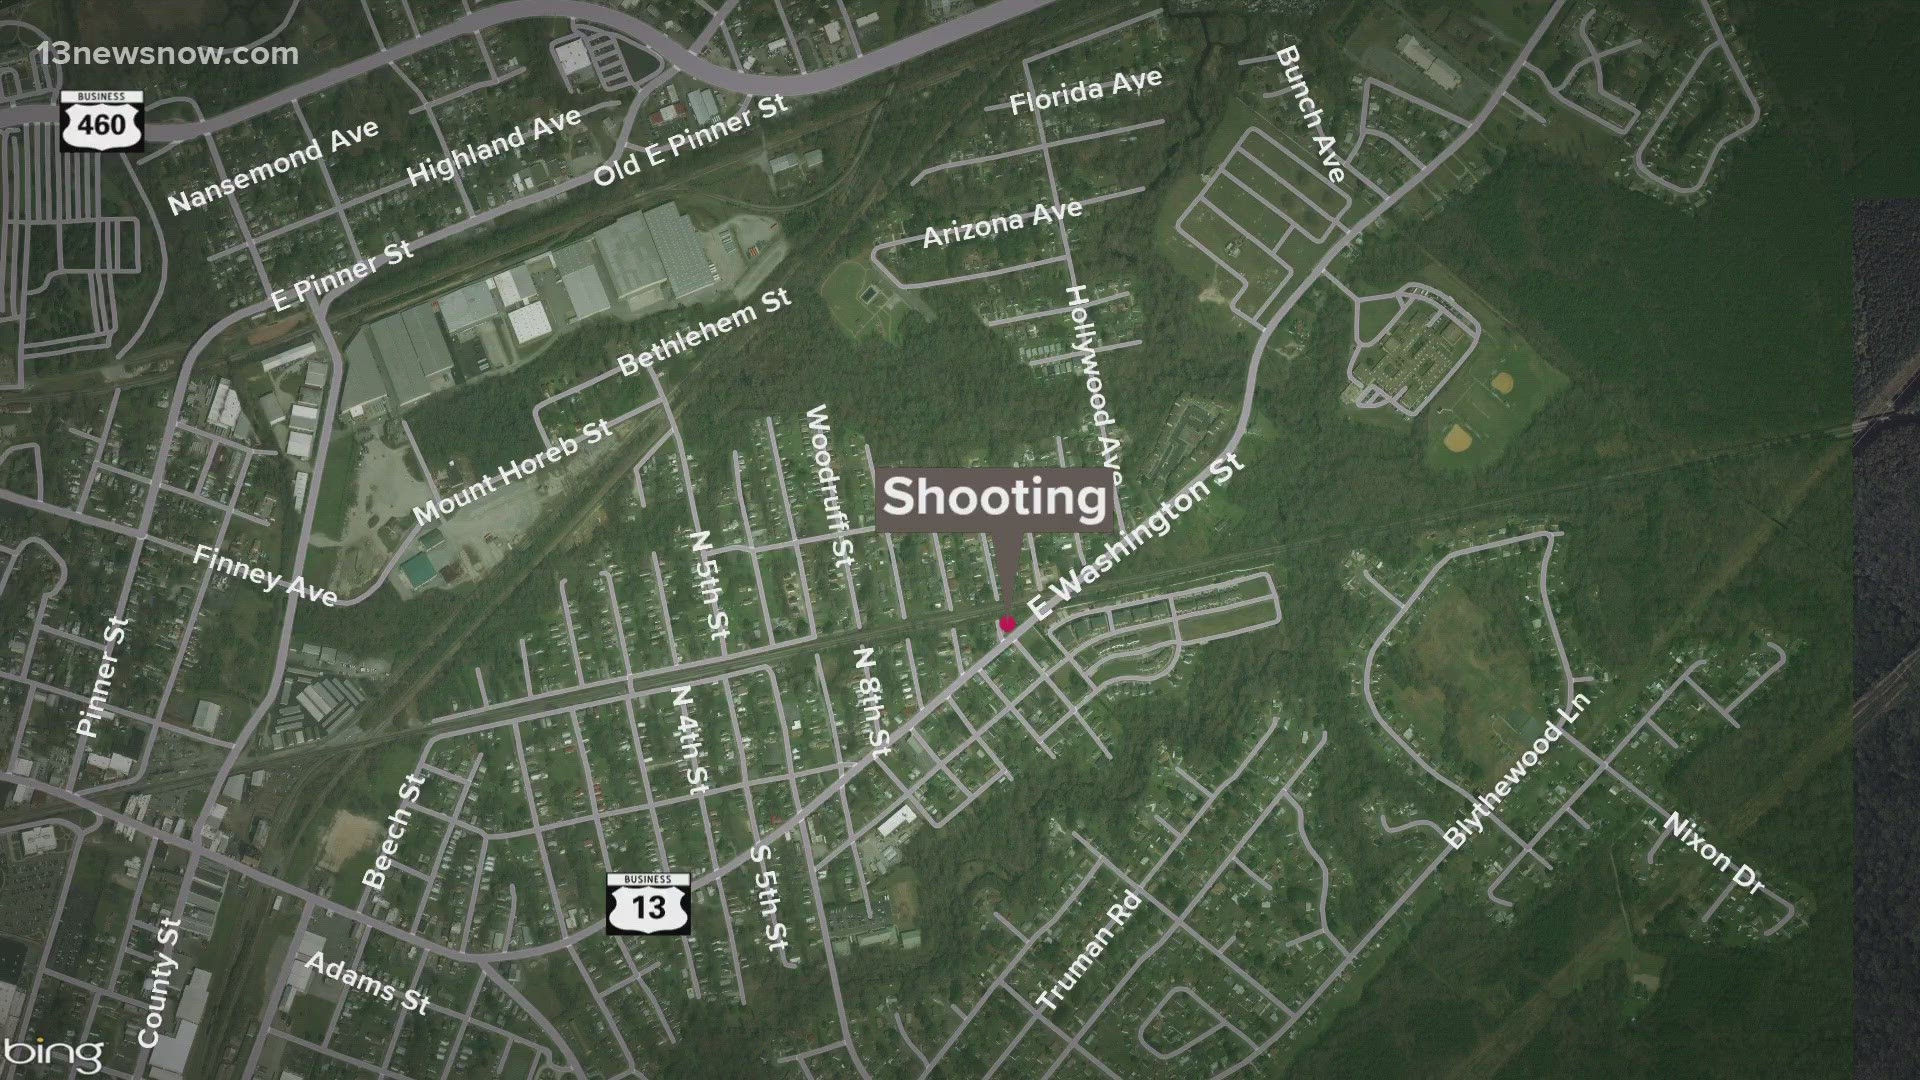 Police said the Thursday night shooting happened on East Washington Street around 6:30 p.m.